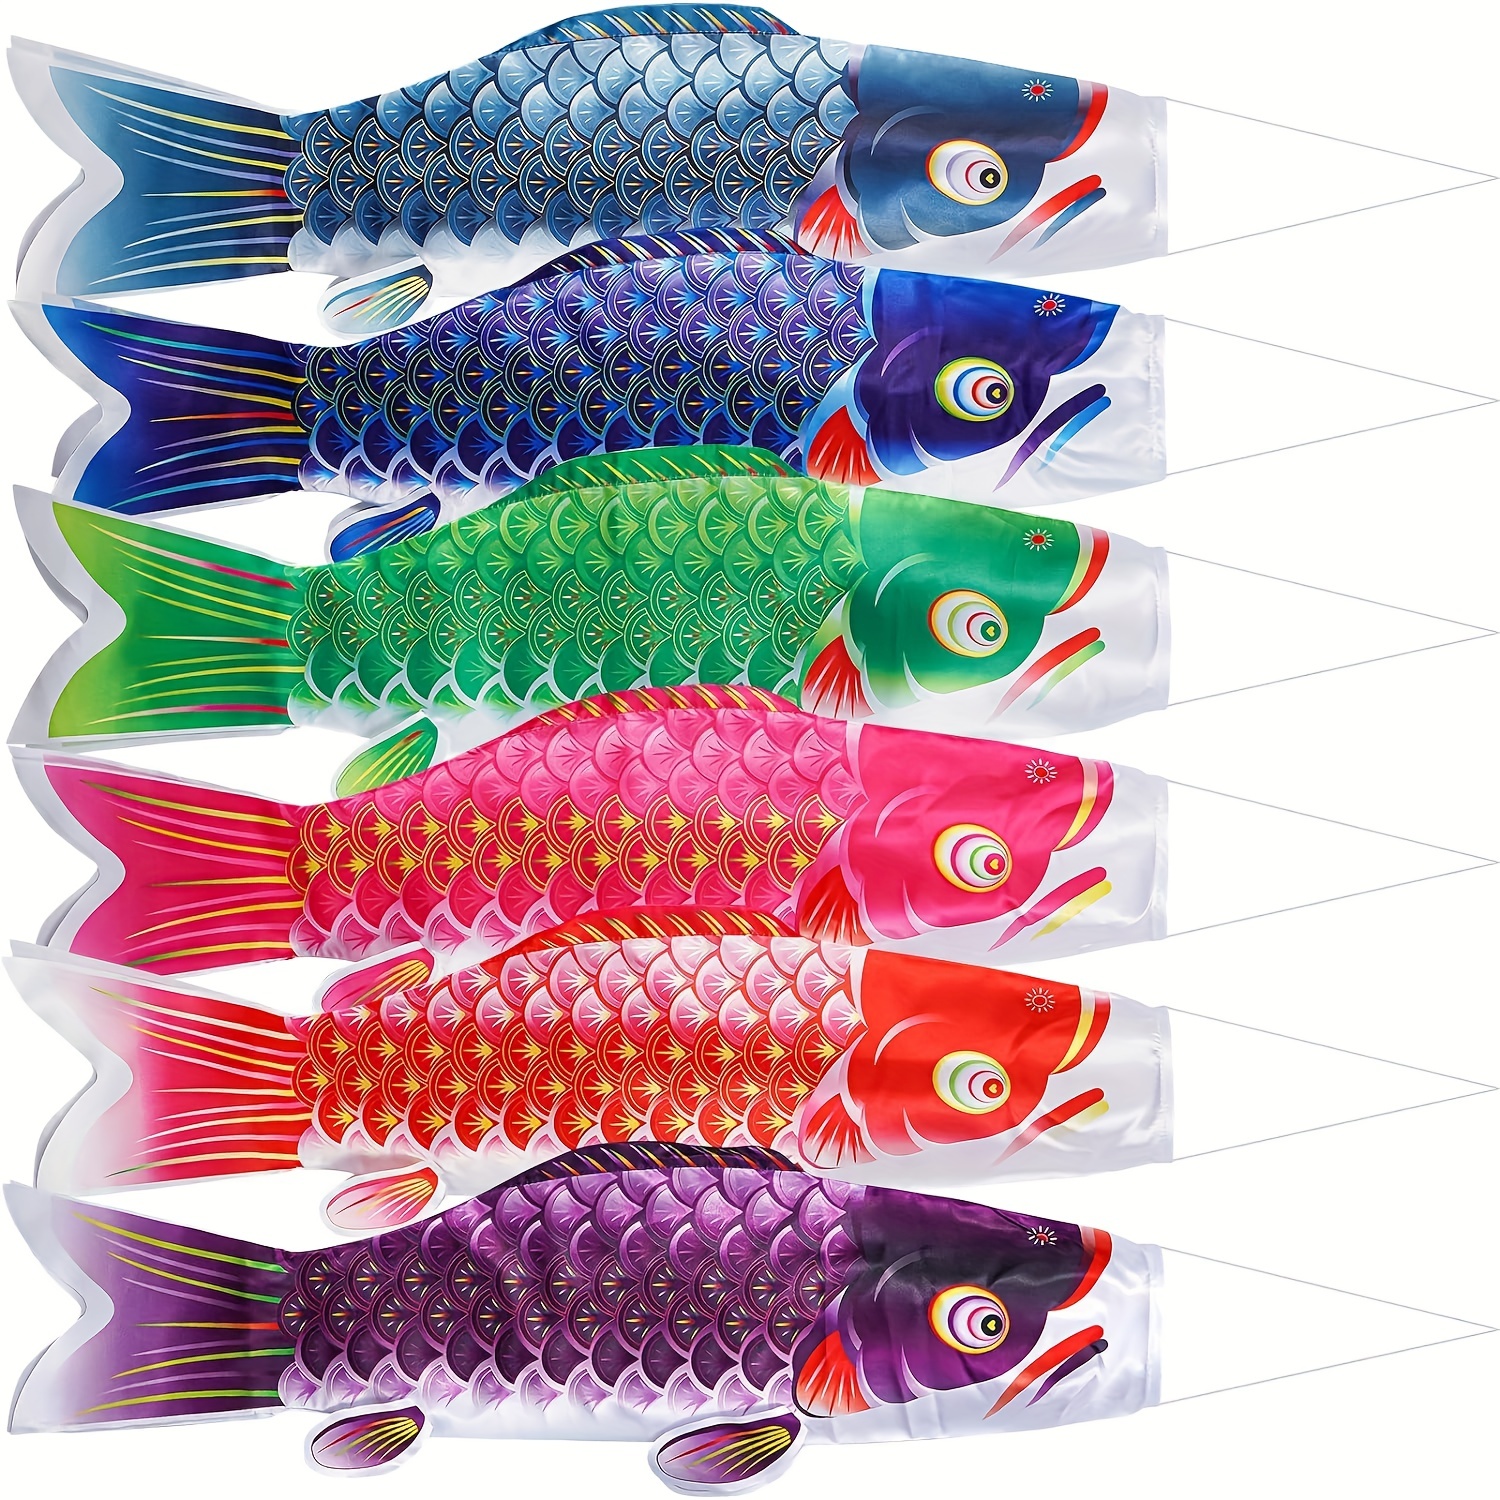 

Japanese Koi Fish Windsock - Vibrant Carp Streamer For Outdoor Decor, Perfect For Sushi Bars & Izakayas